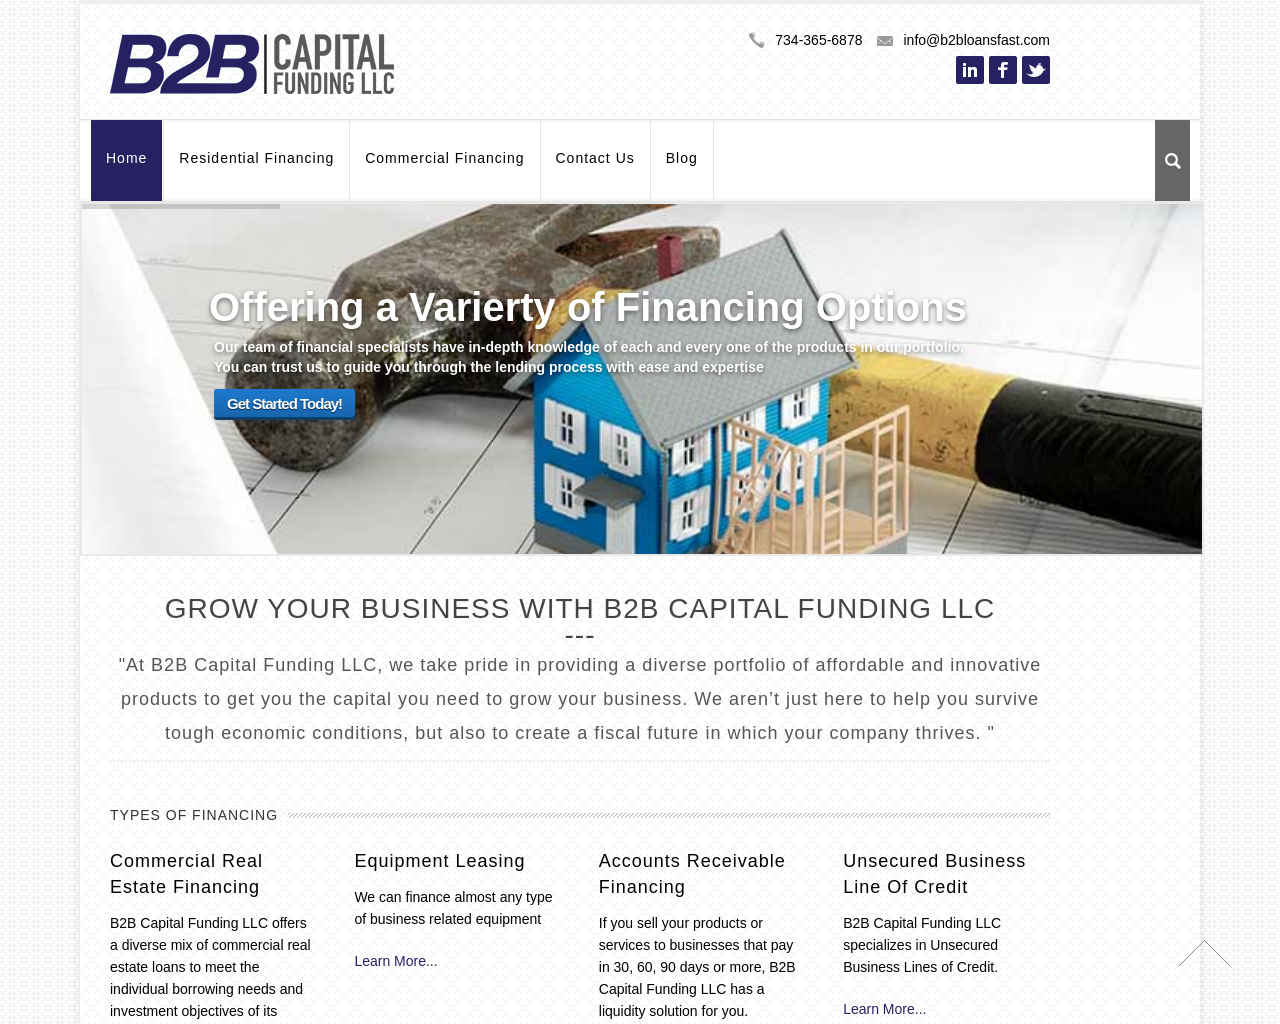 B2B Capital Funding, LLC